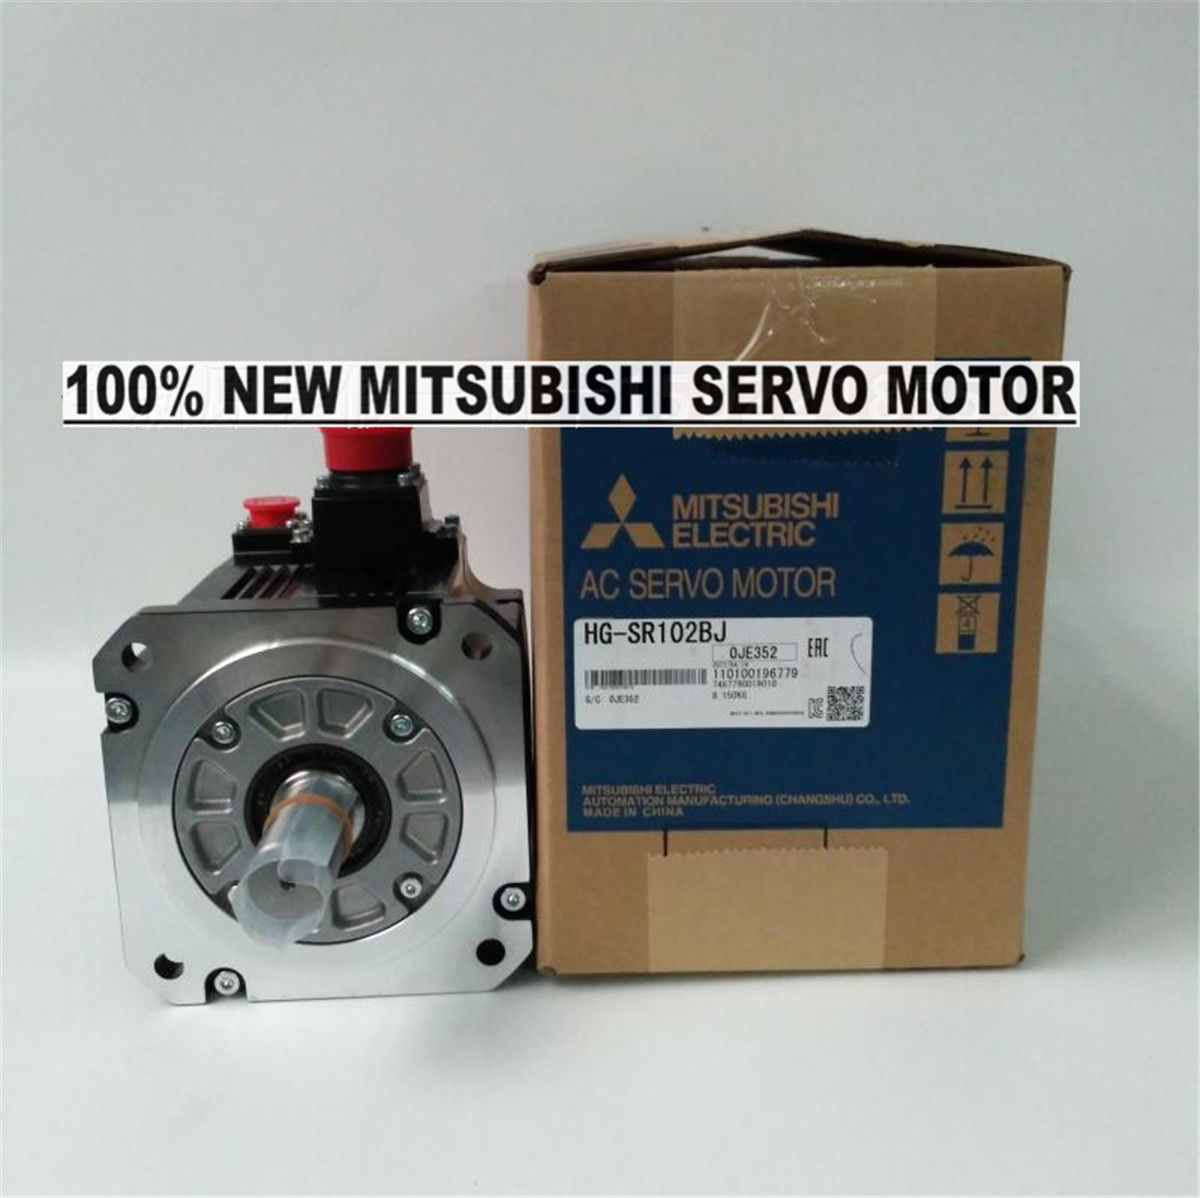 NEW Mitsubishi Servo Motor HG-SR102BJ in box HGSR102BJ